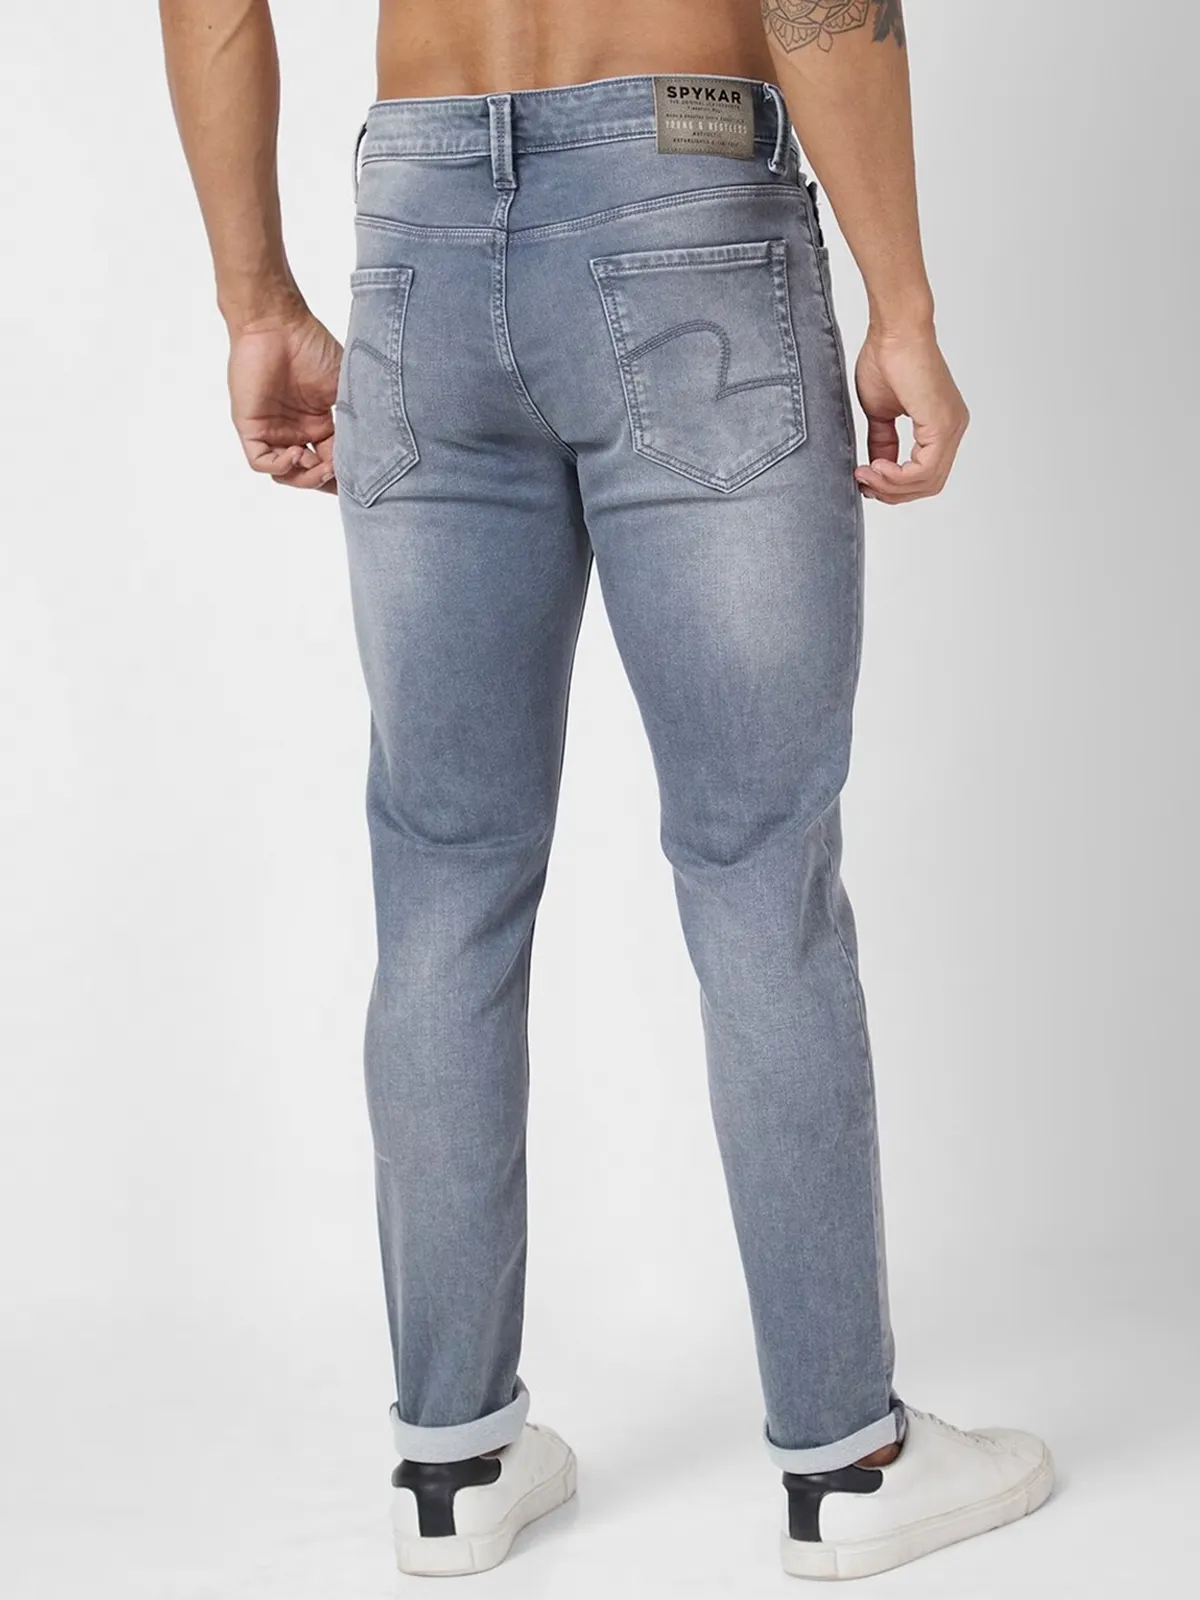 Spykar washed skinny fit grey jeans